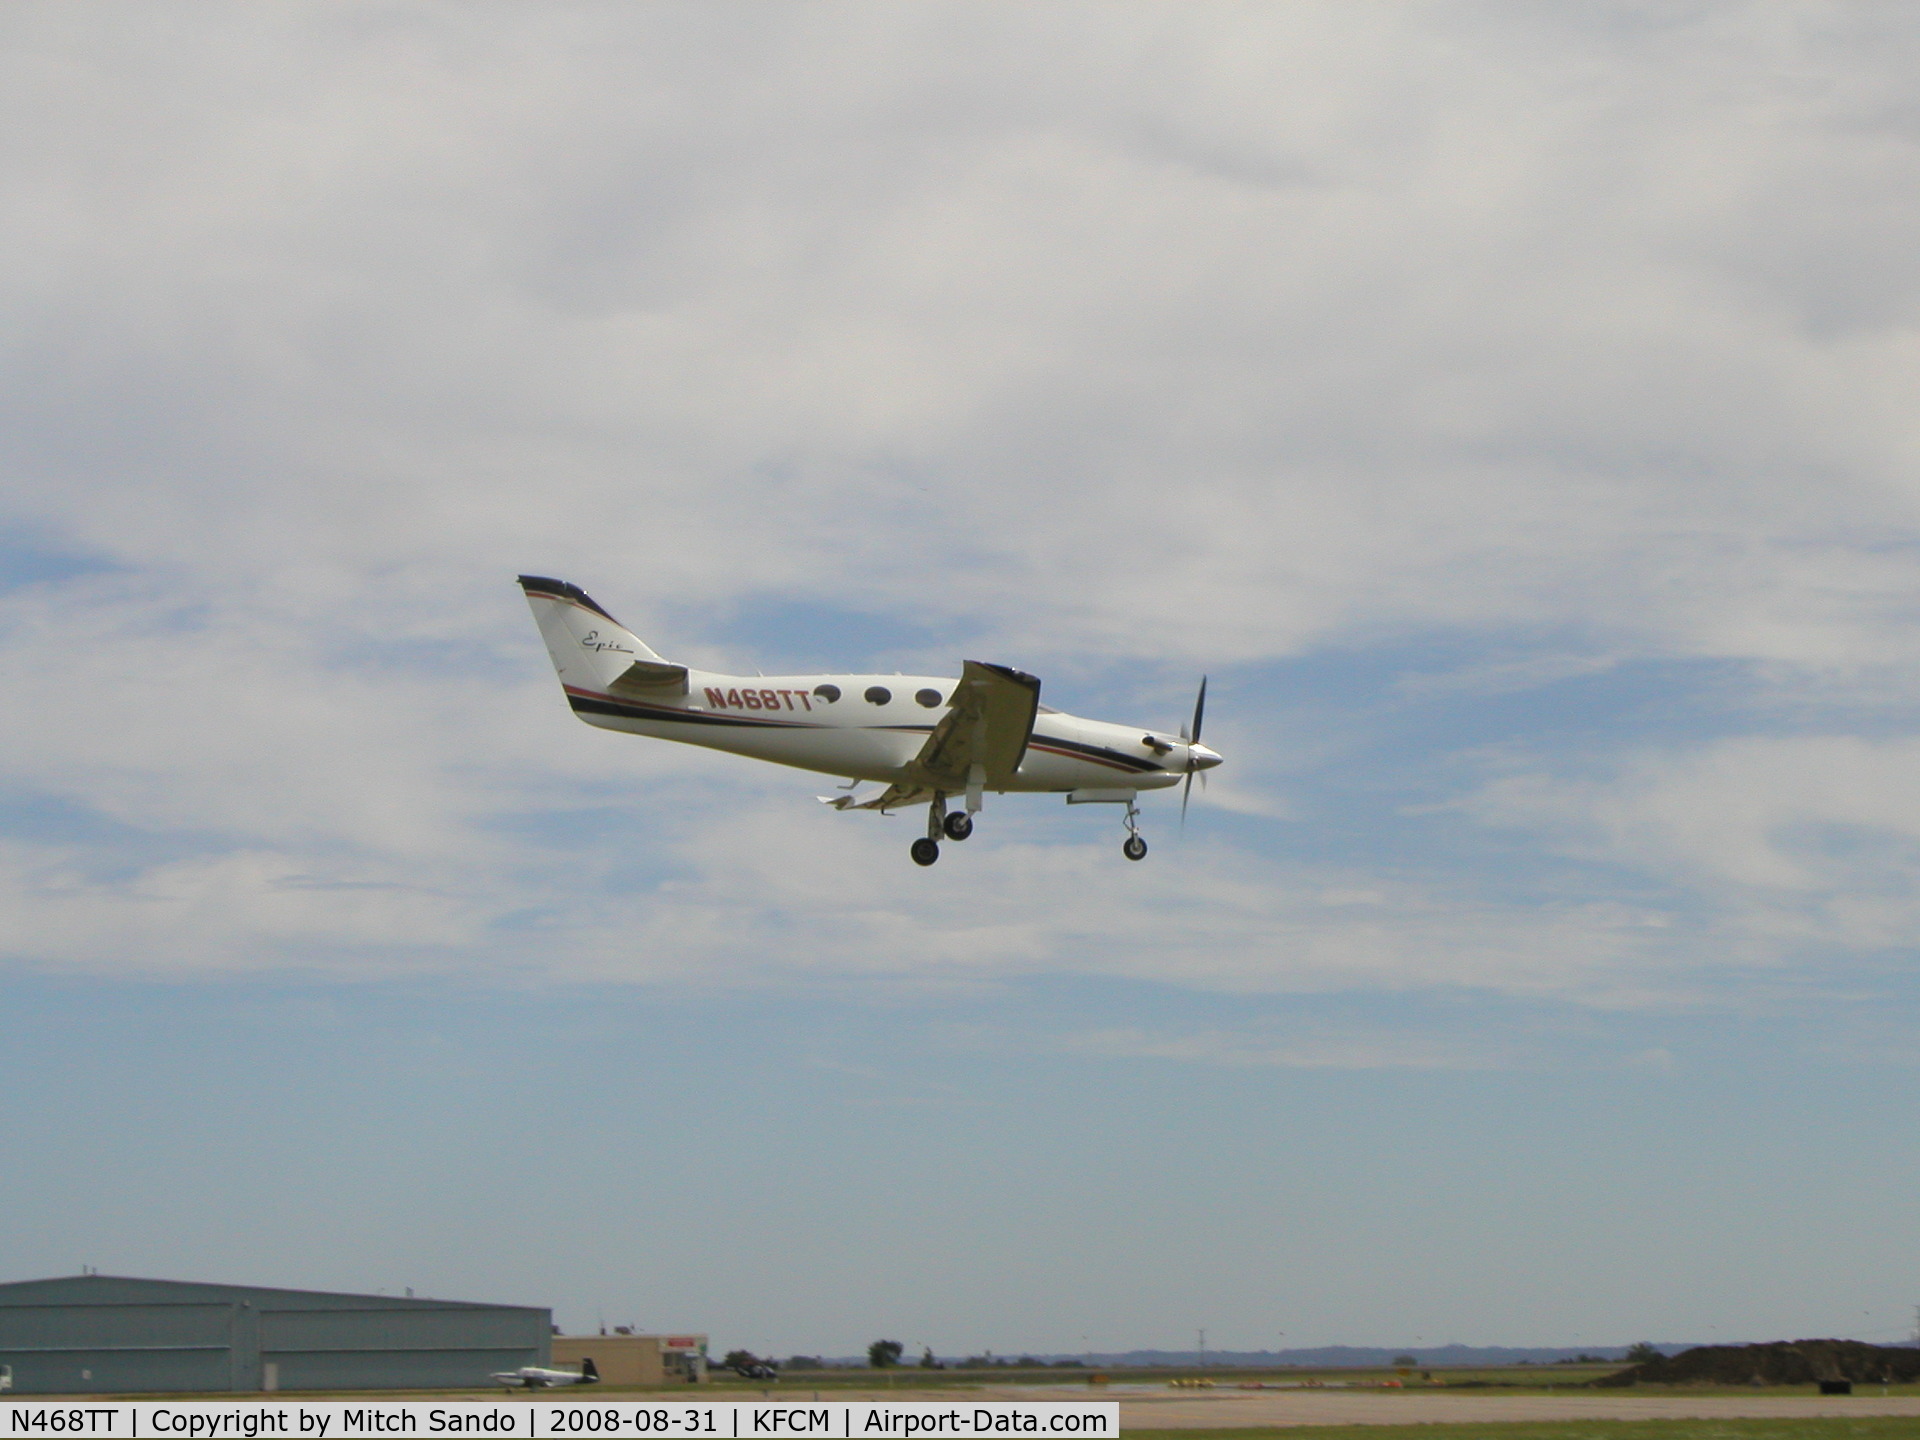 N468TT, 2006 AIR Epic LT C/N 012, Landing Runway 18 IFR from Tallahassee, FL (TLH).